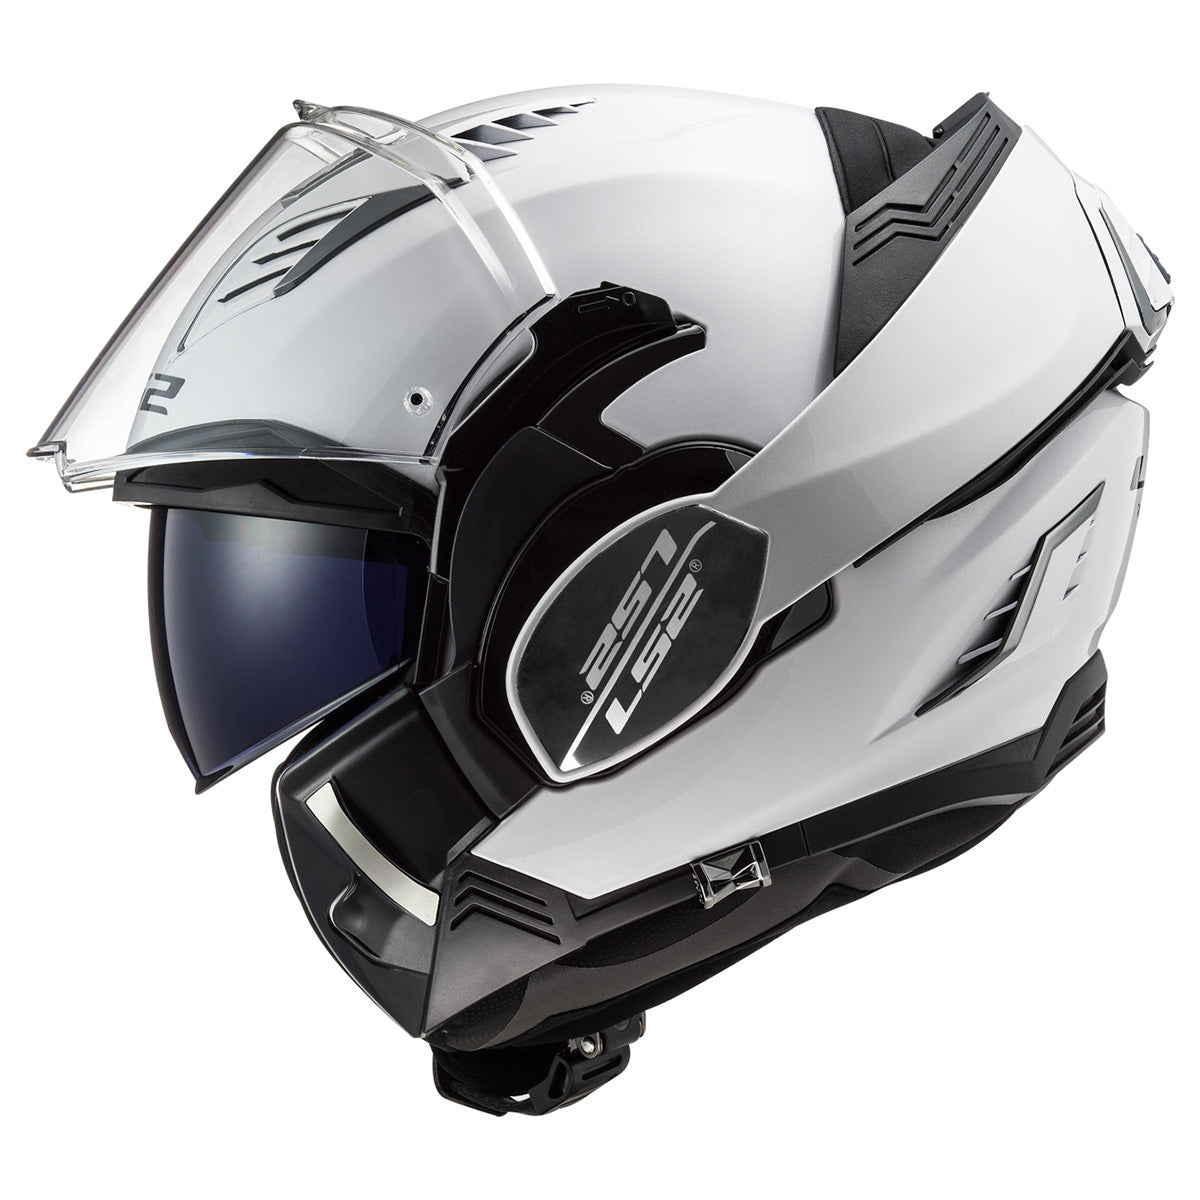  LS2 Helmets Valiant II Blackout Valiant II Modular Helmet  (Matte Black - X-Small) : LS2 Helmets: Automotive